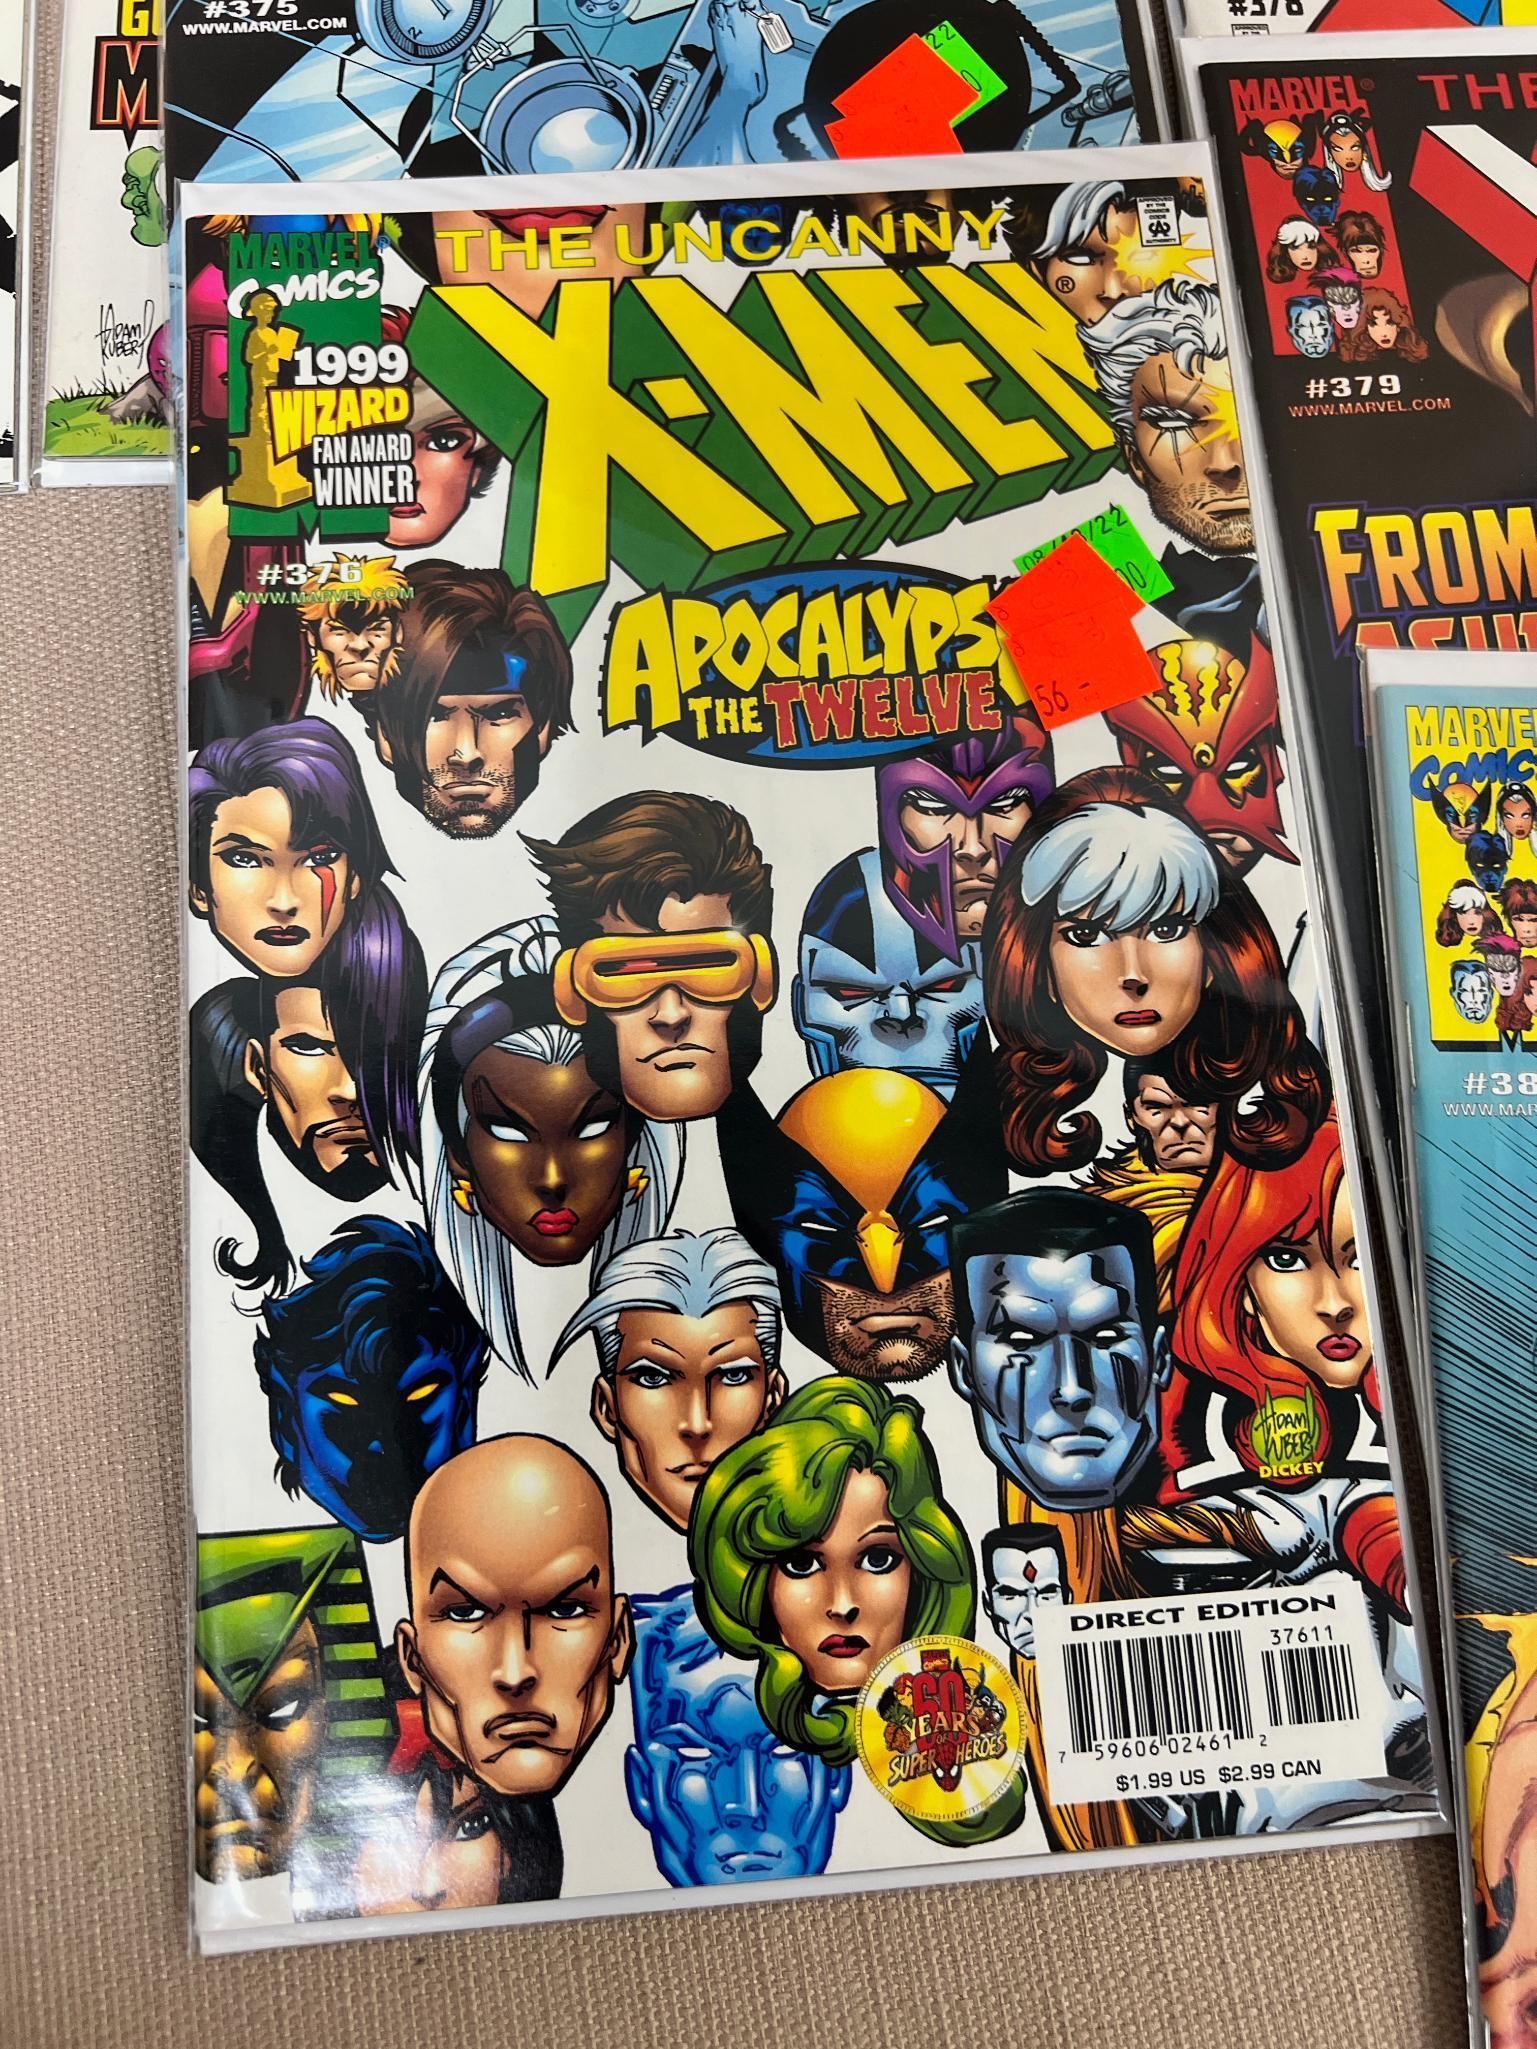 24 Uncanny X-Men Comic Books, see list below